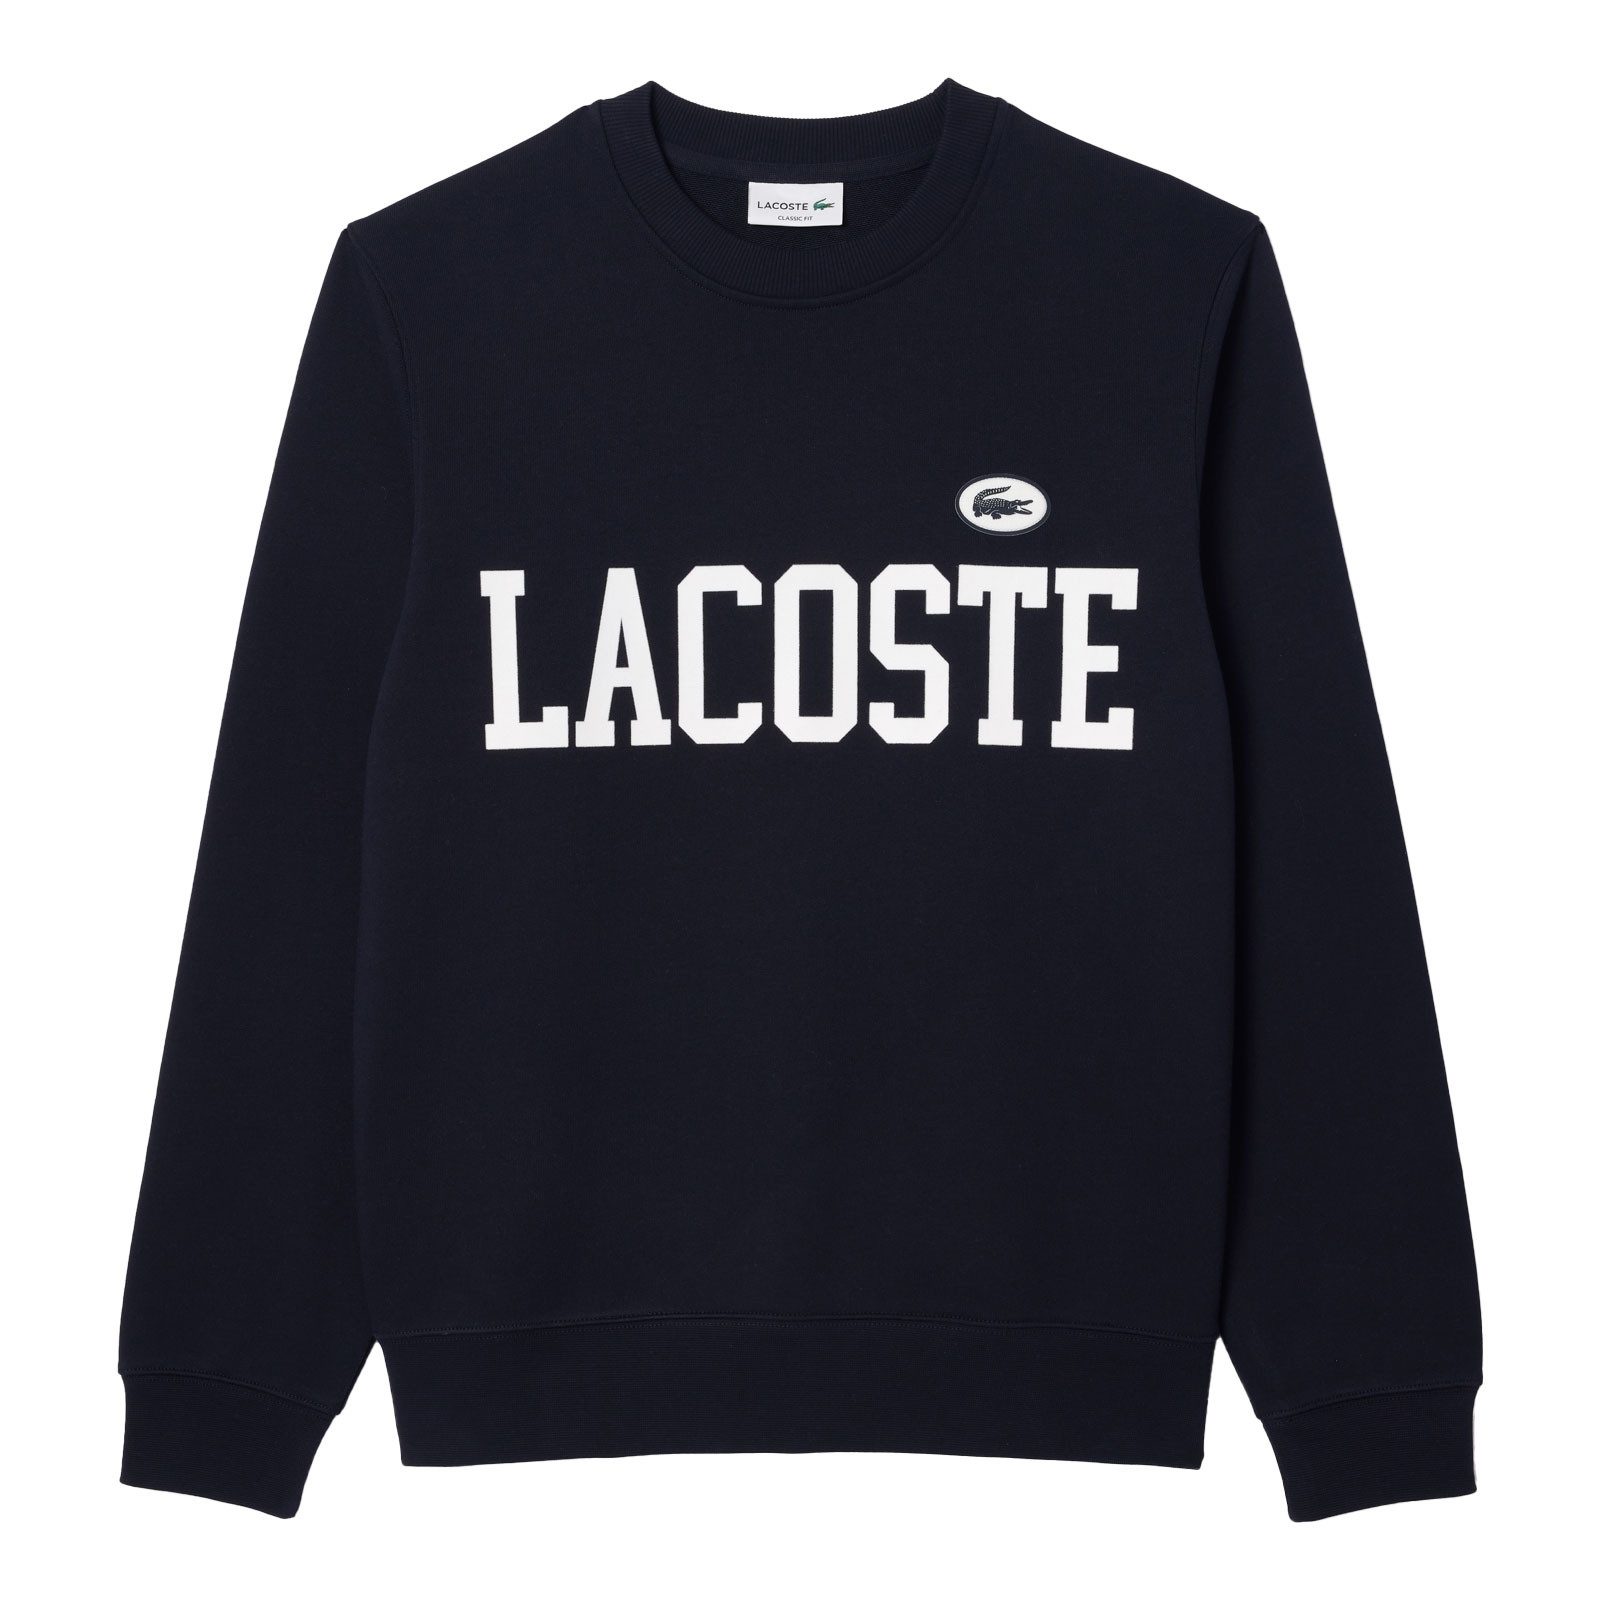 Lacoste Sweatshirt Jogging Sweatshirt mit großem Markenprint